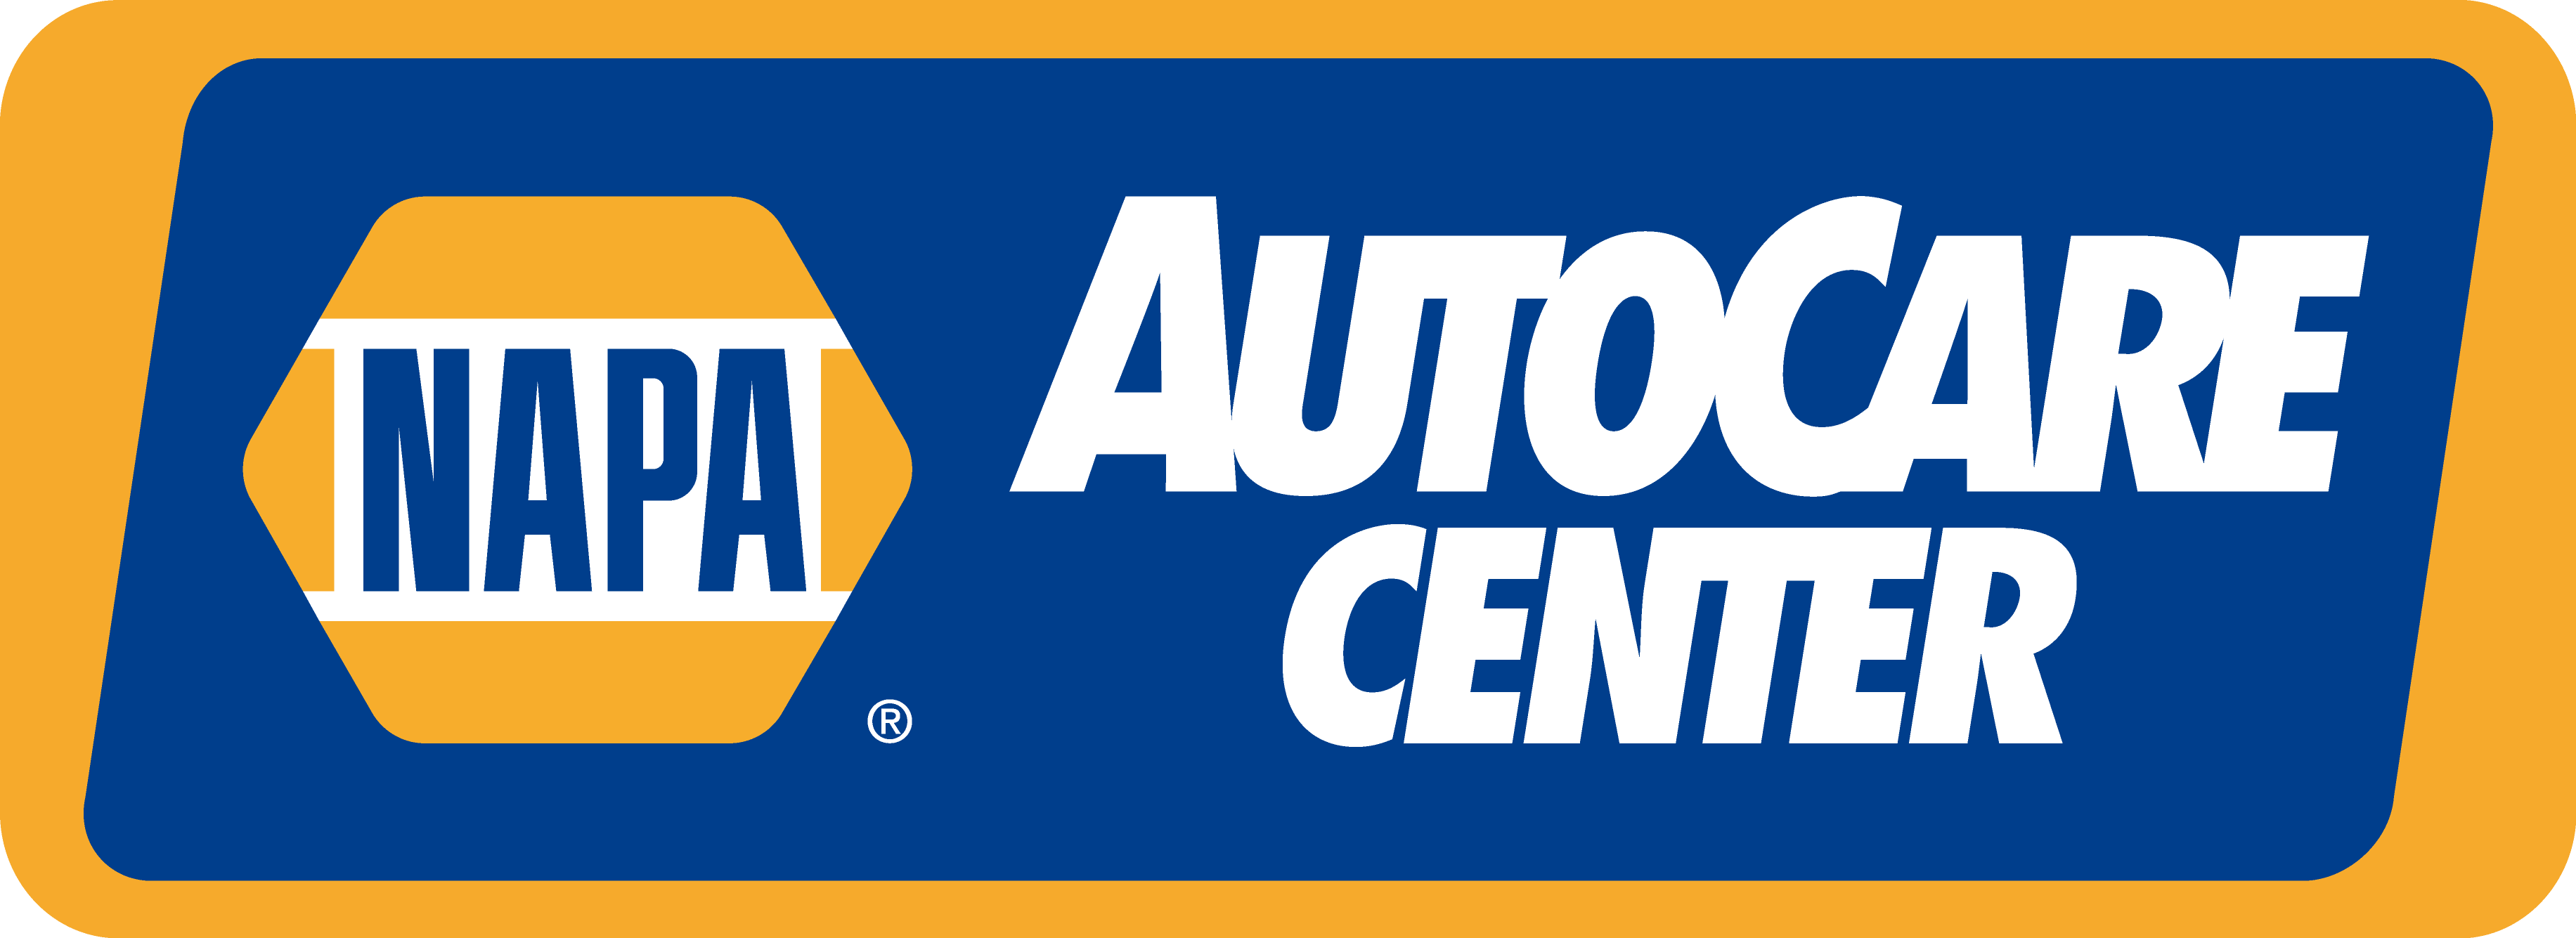 NAPA Auto Care Center, Richardson Auto Repair, Niagara Falls, NY, 14304